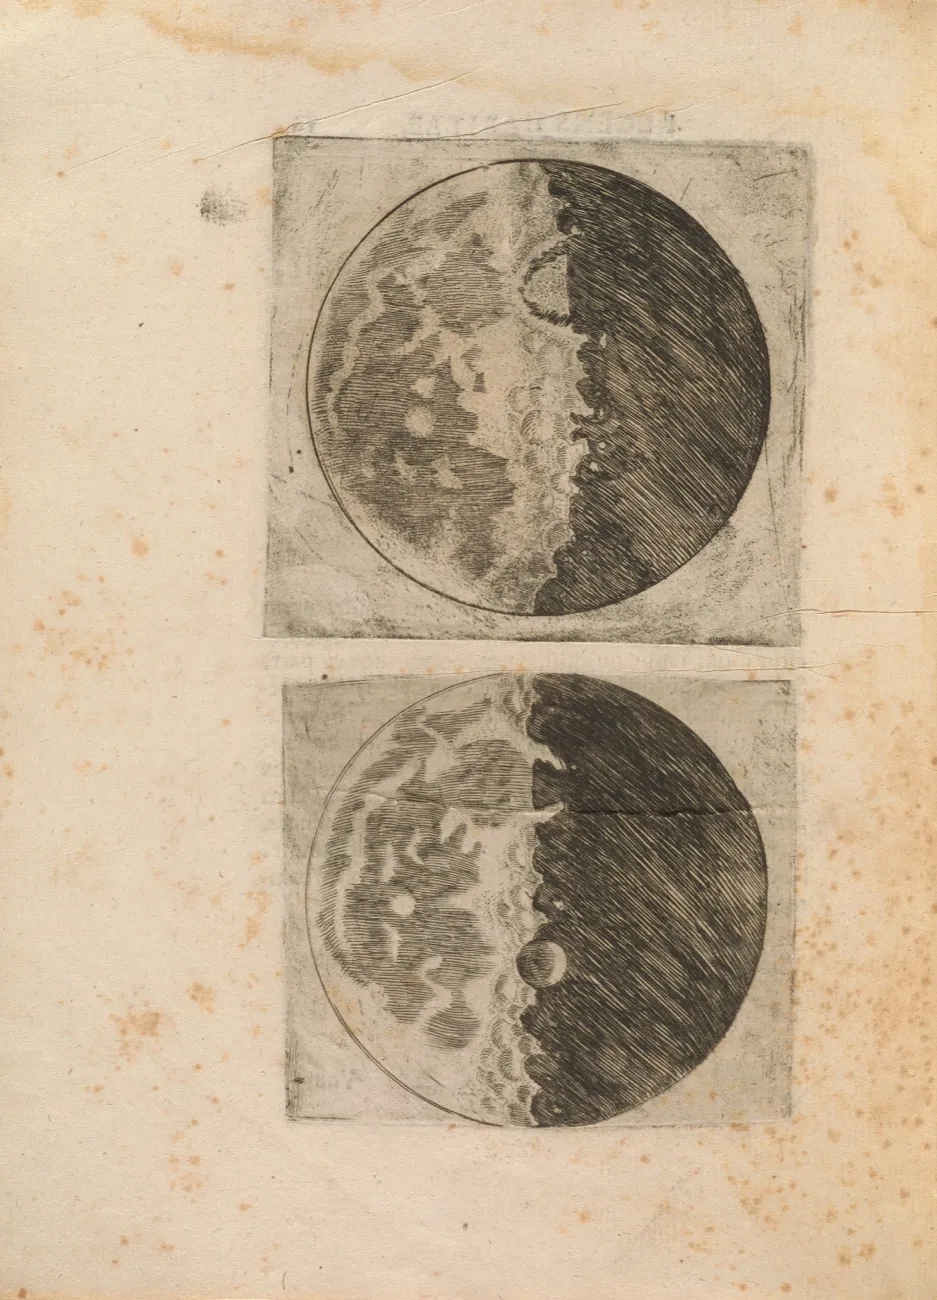 Nguồn: "Two Drawings of Waxing Moon, in Siderius Nuncius (The Starry Messenger)" (1610), Galileo Galilei